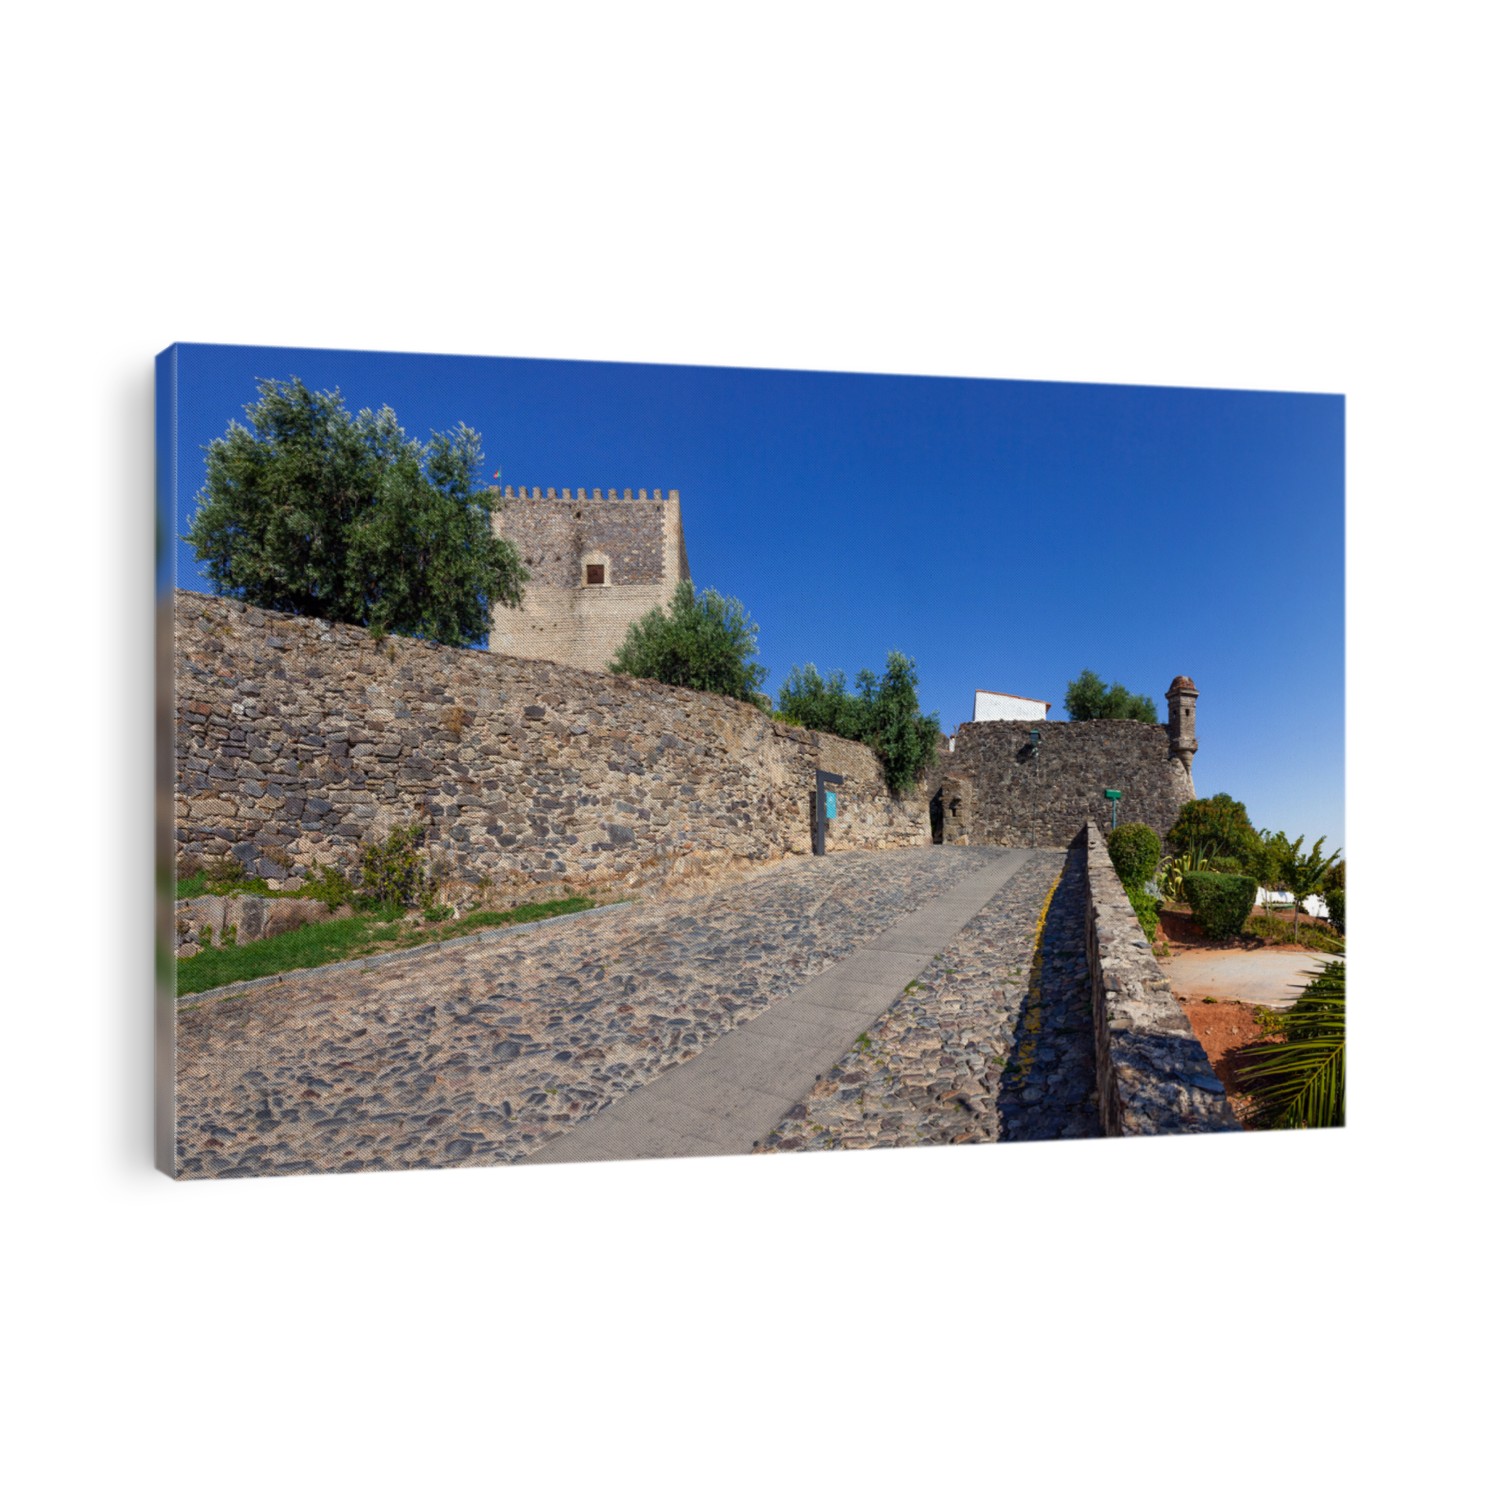 Image of the street that leads to the Castelo de Vide castle entrance. Alto Alentejo, Portugal.